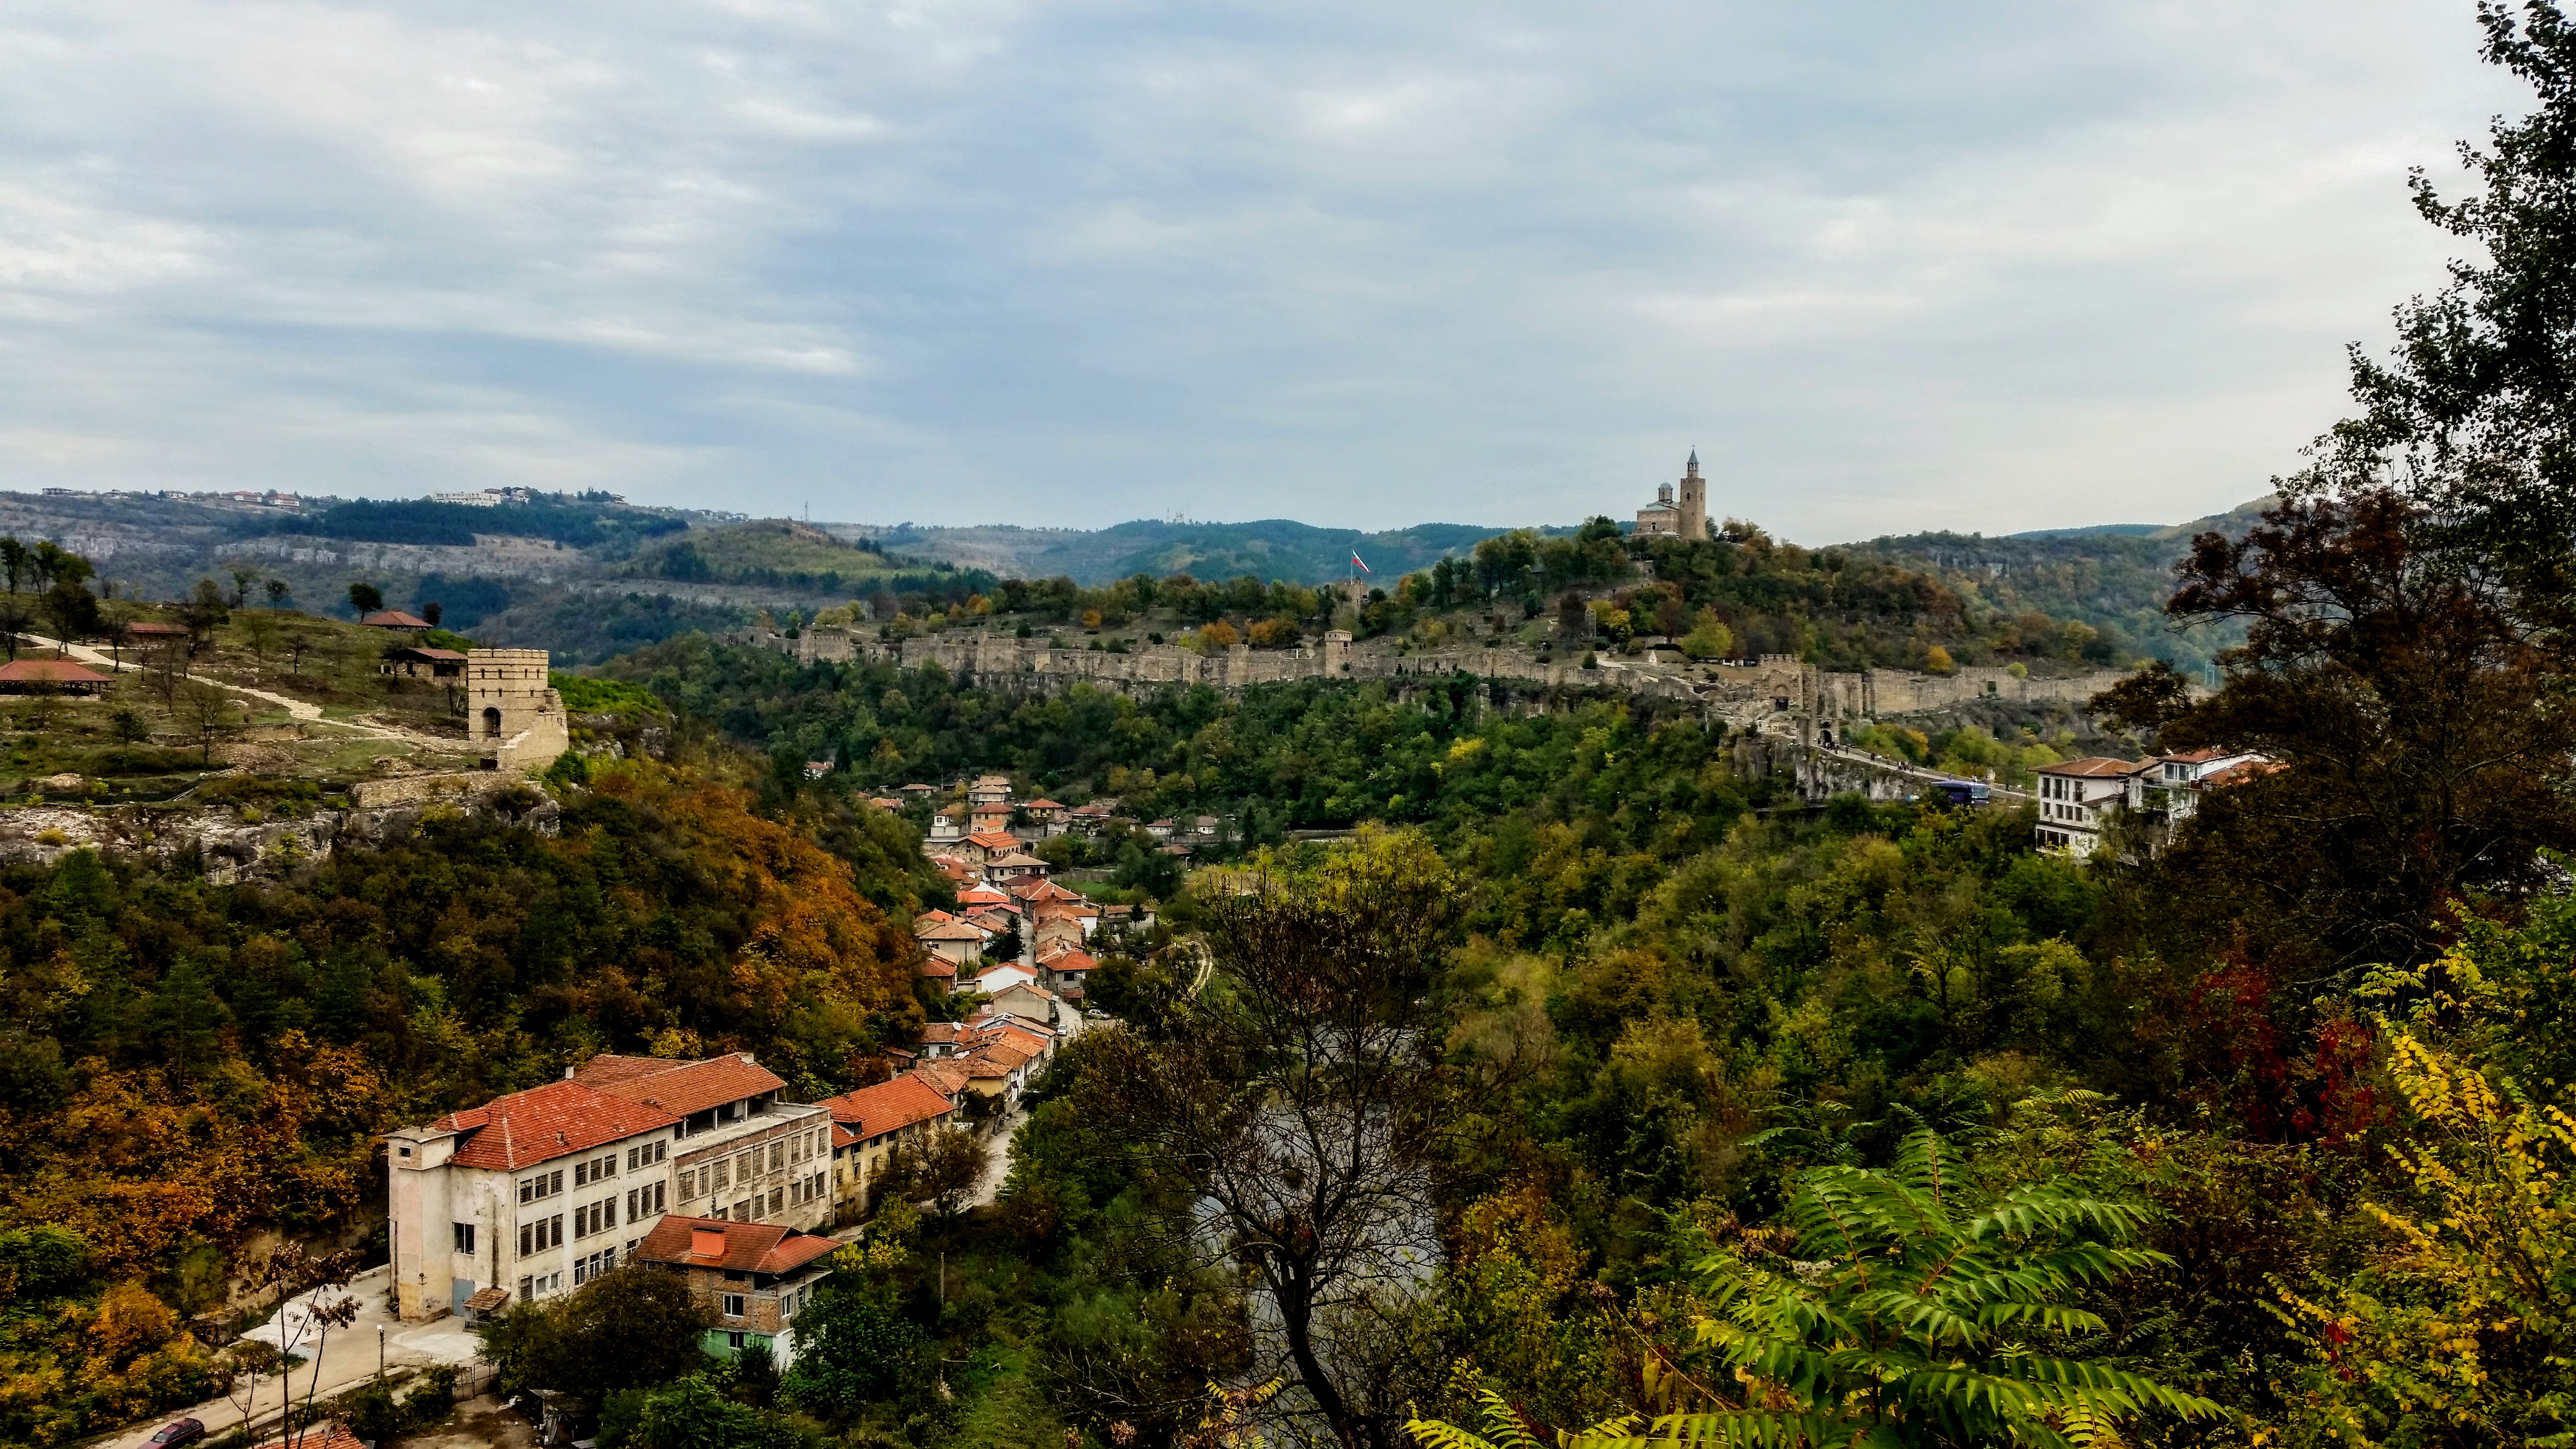 Going South. Veliko Tarnovo, Bulgaria | The Lonely Traveler